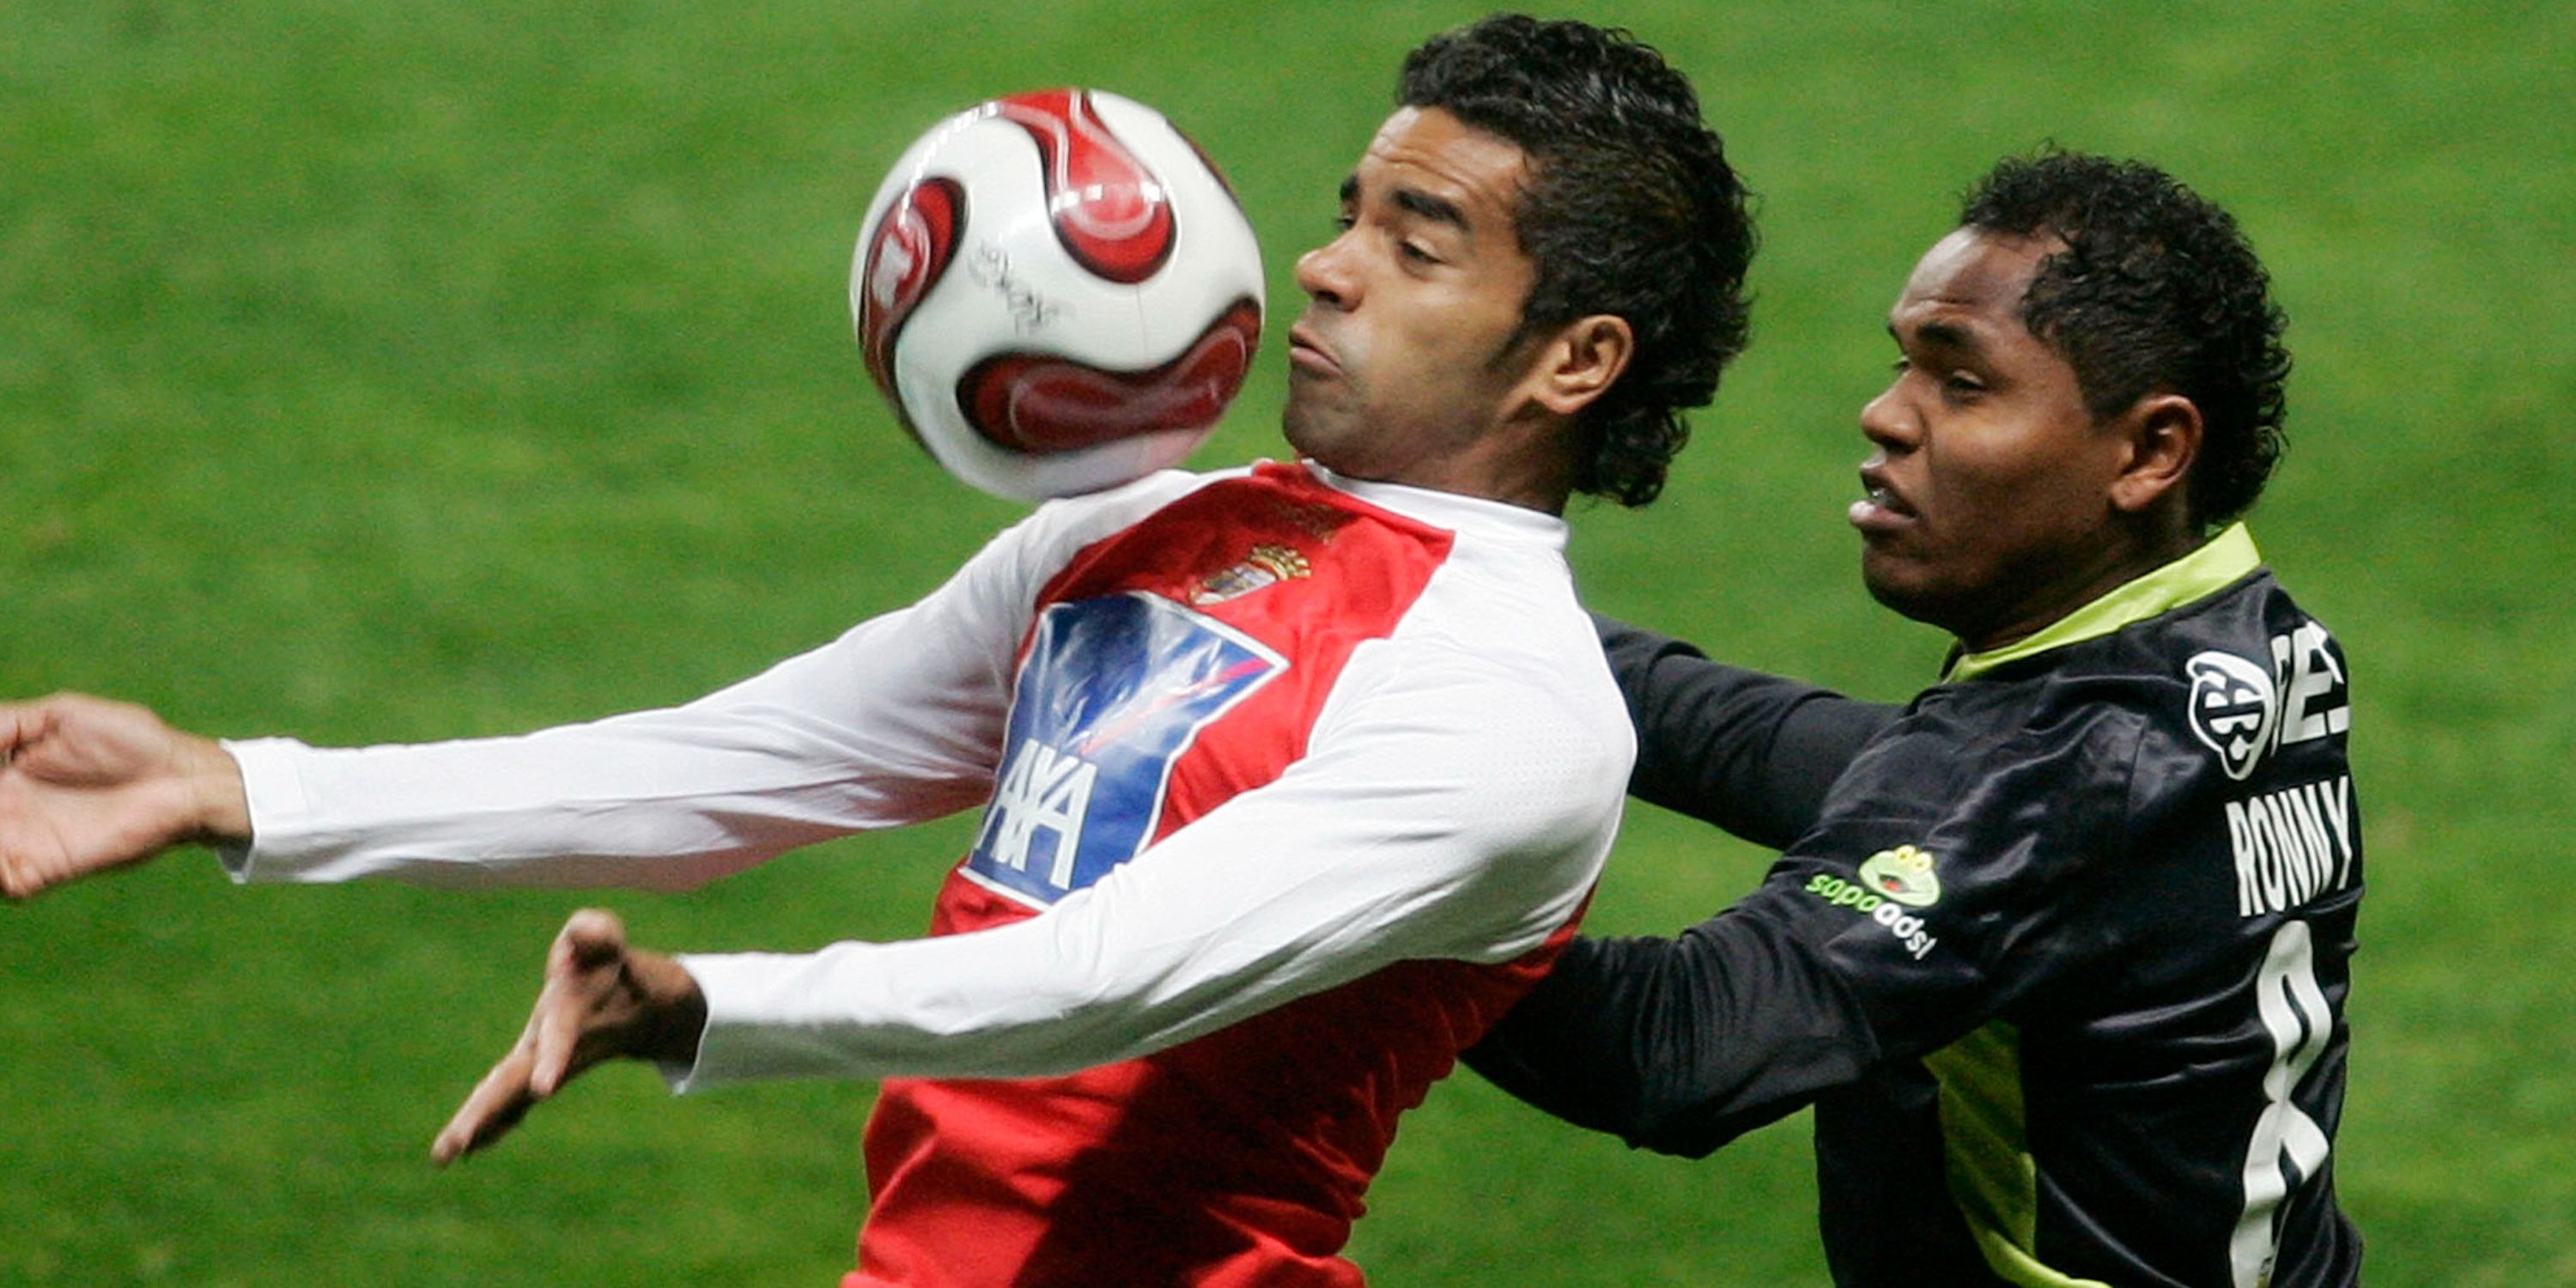 Braga's Jorginho fights for the ball with Sporting's Ronny.